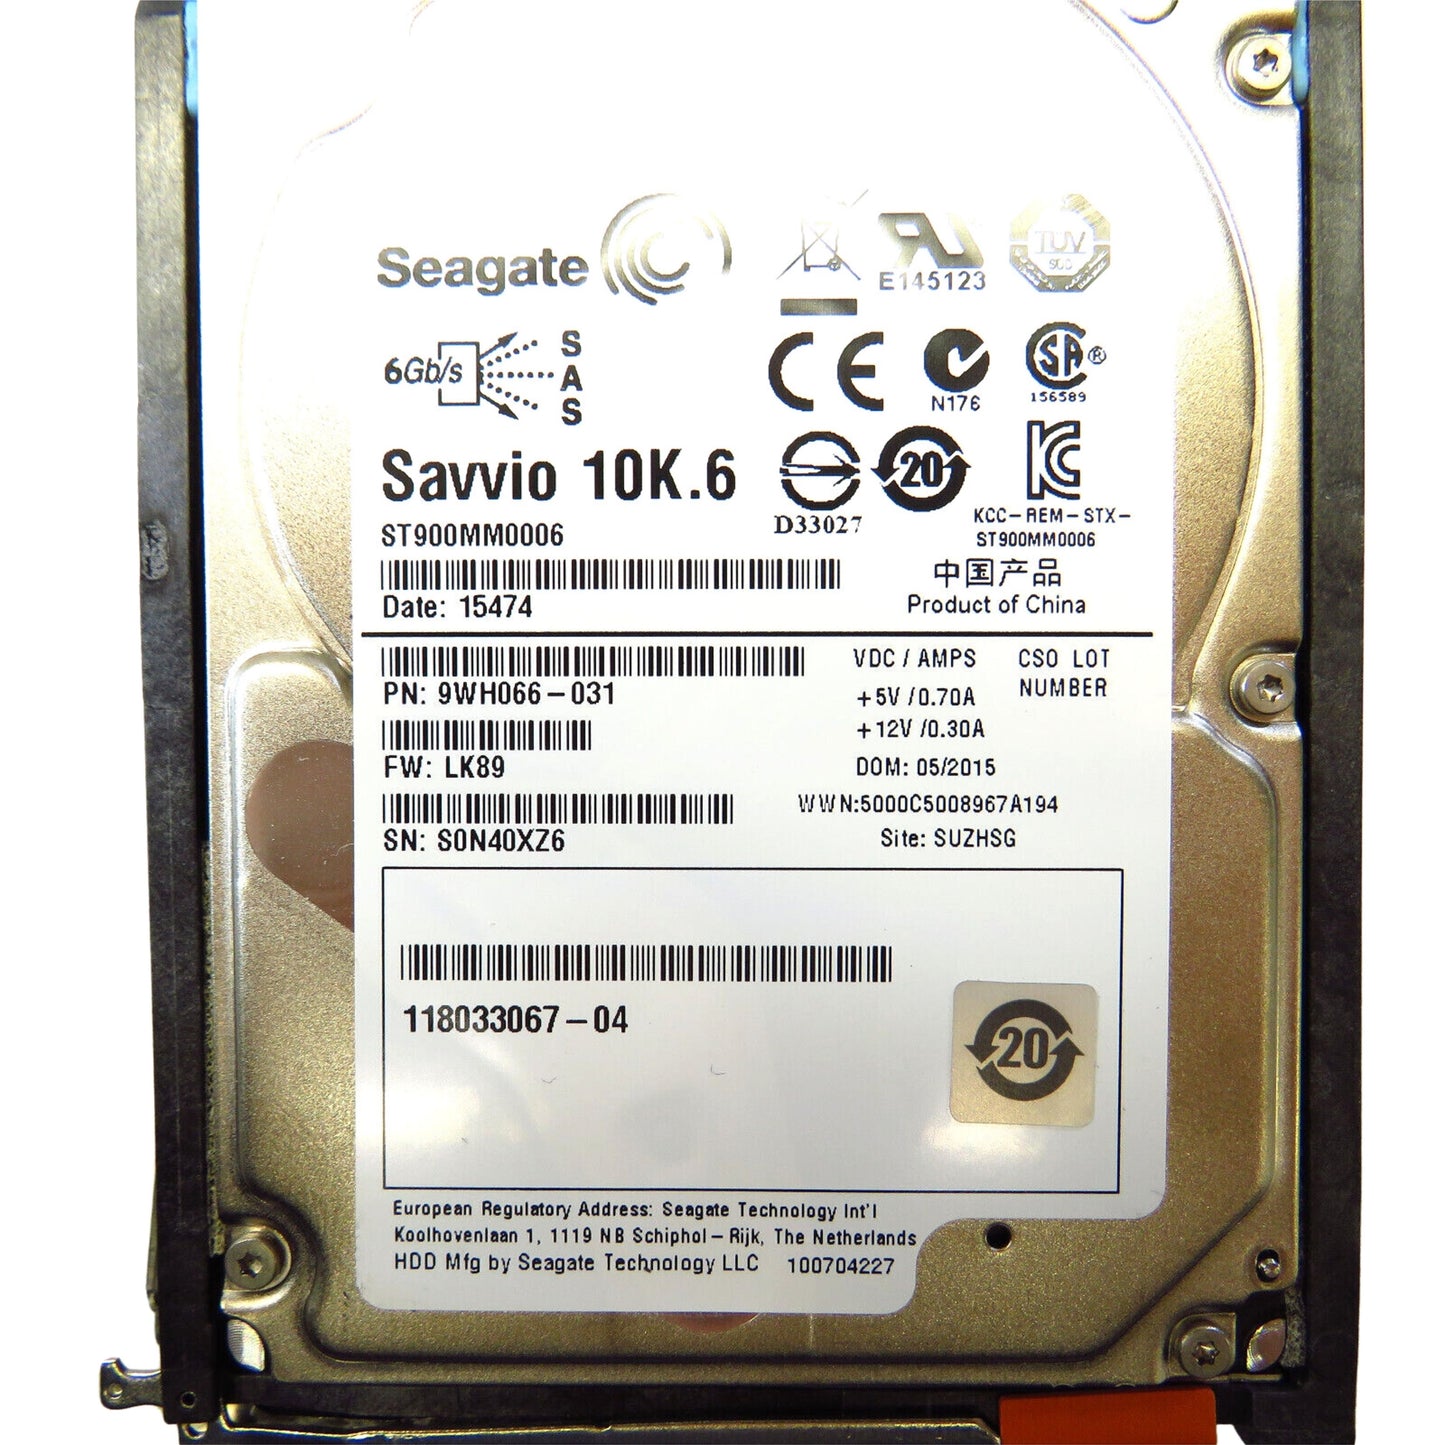 EMC 005050212 2.5" 900GB 10000RPM SAS 6Gb/s Hard Disk Drive (HDD), Silver (Refurbished)